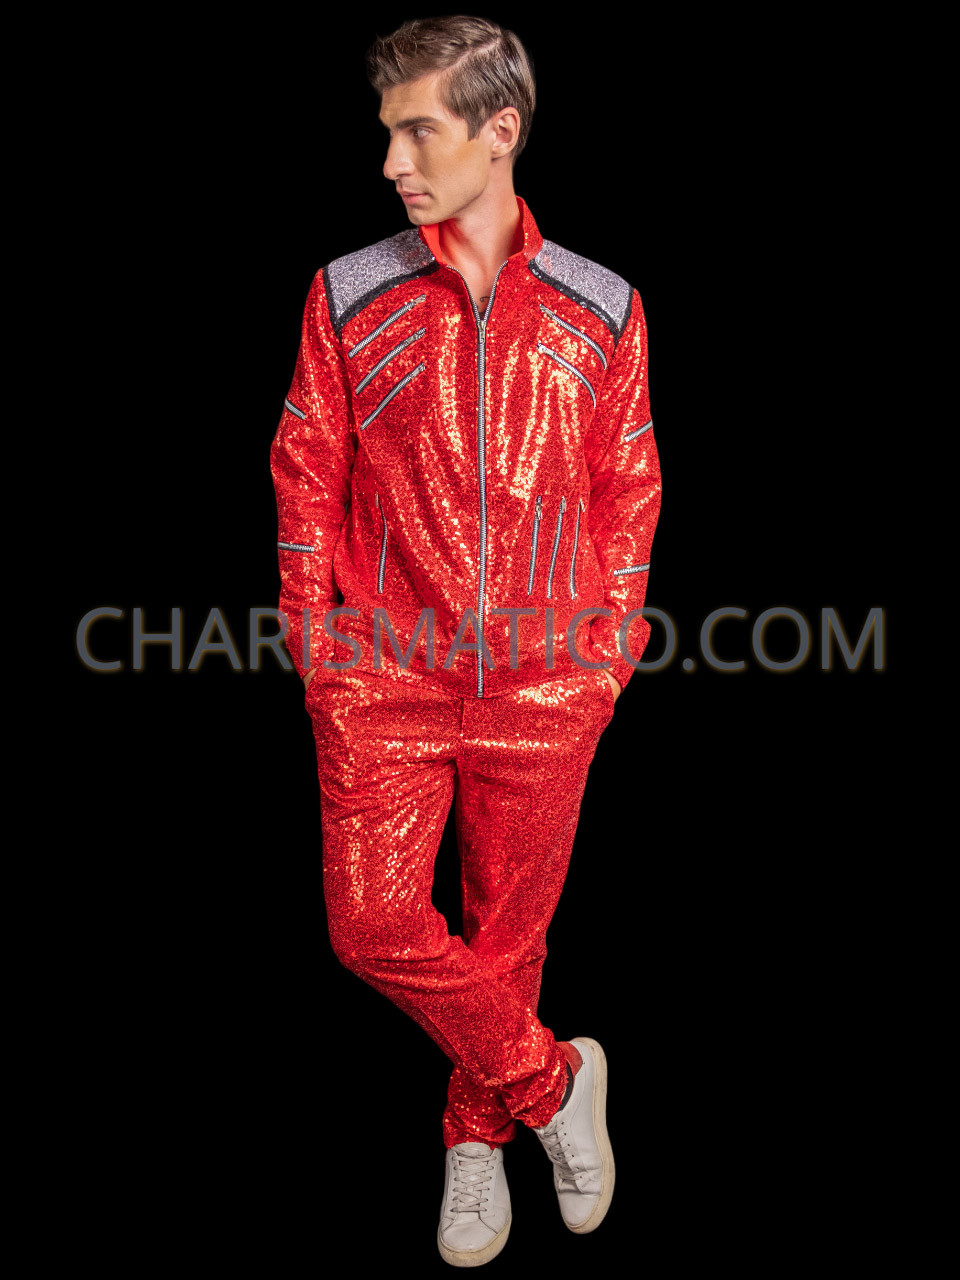 Michael Jackson Costume Accessory, Sash